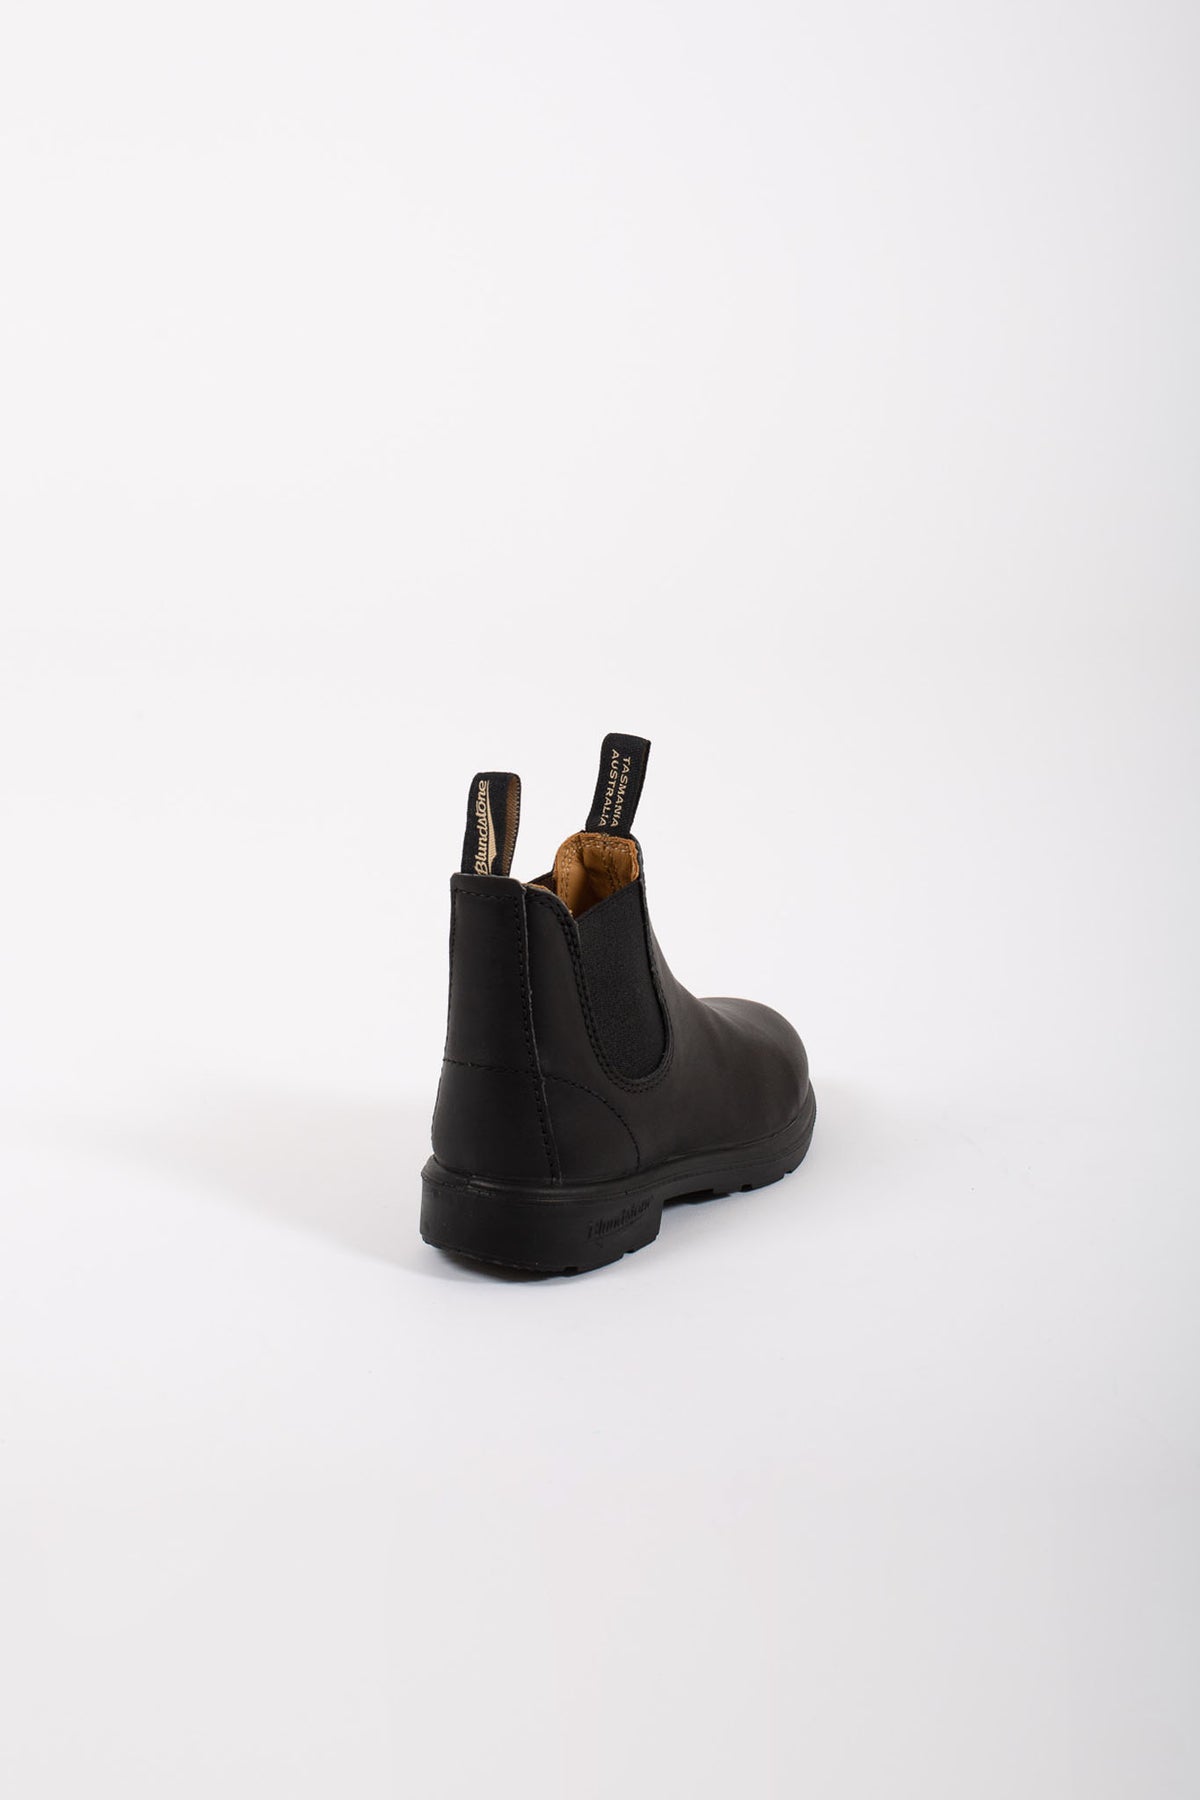 Blundstone Boot Black Premium Leather Nero Unisex Bambini - 4